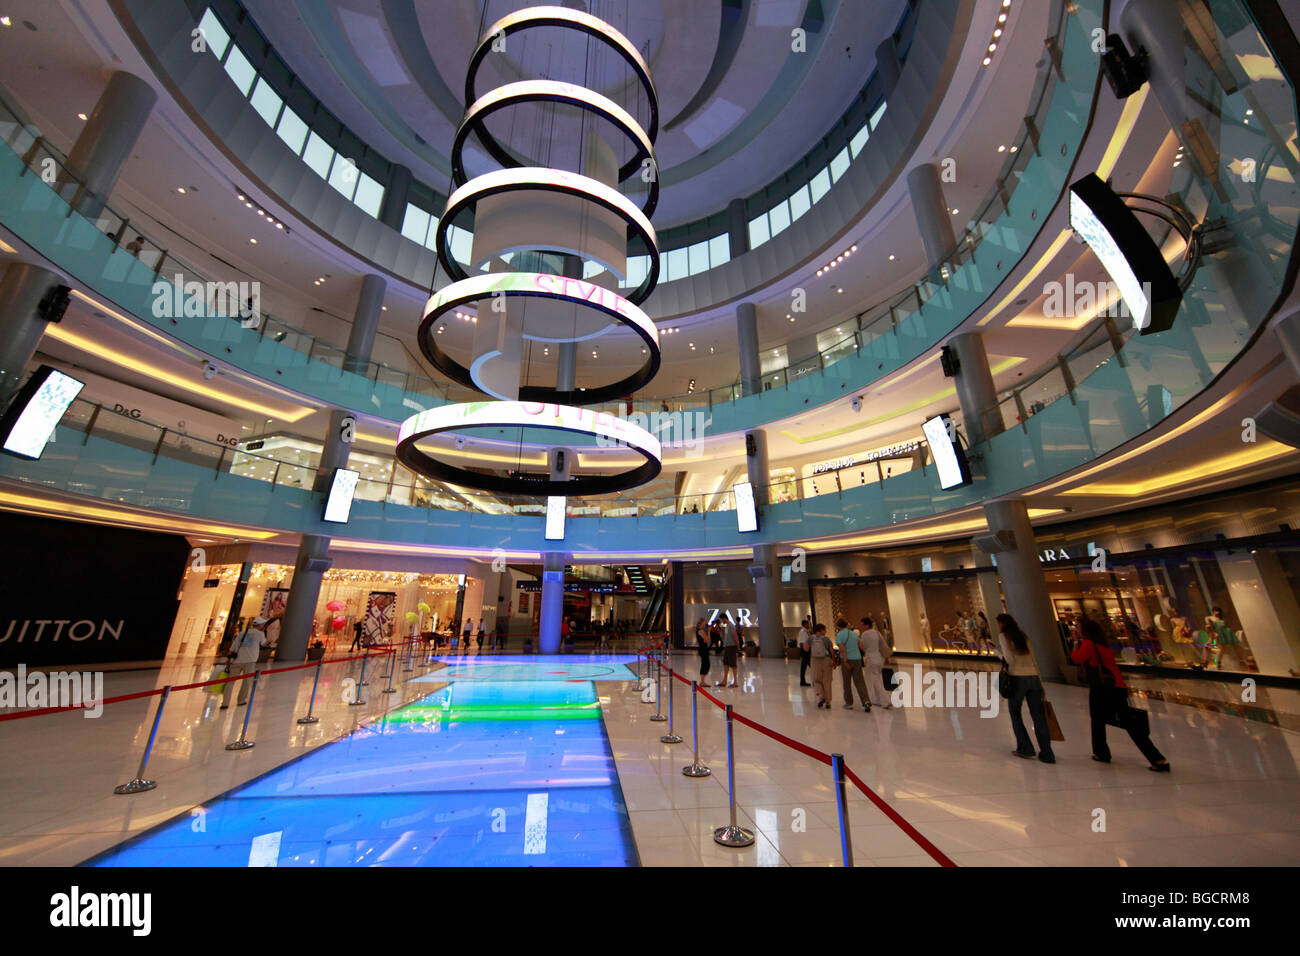 The Mall of Dubai, United Arab Emirates Stock Photo